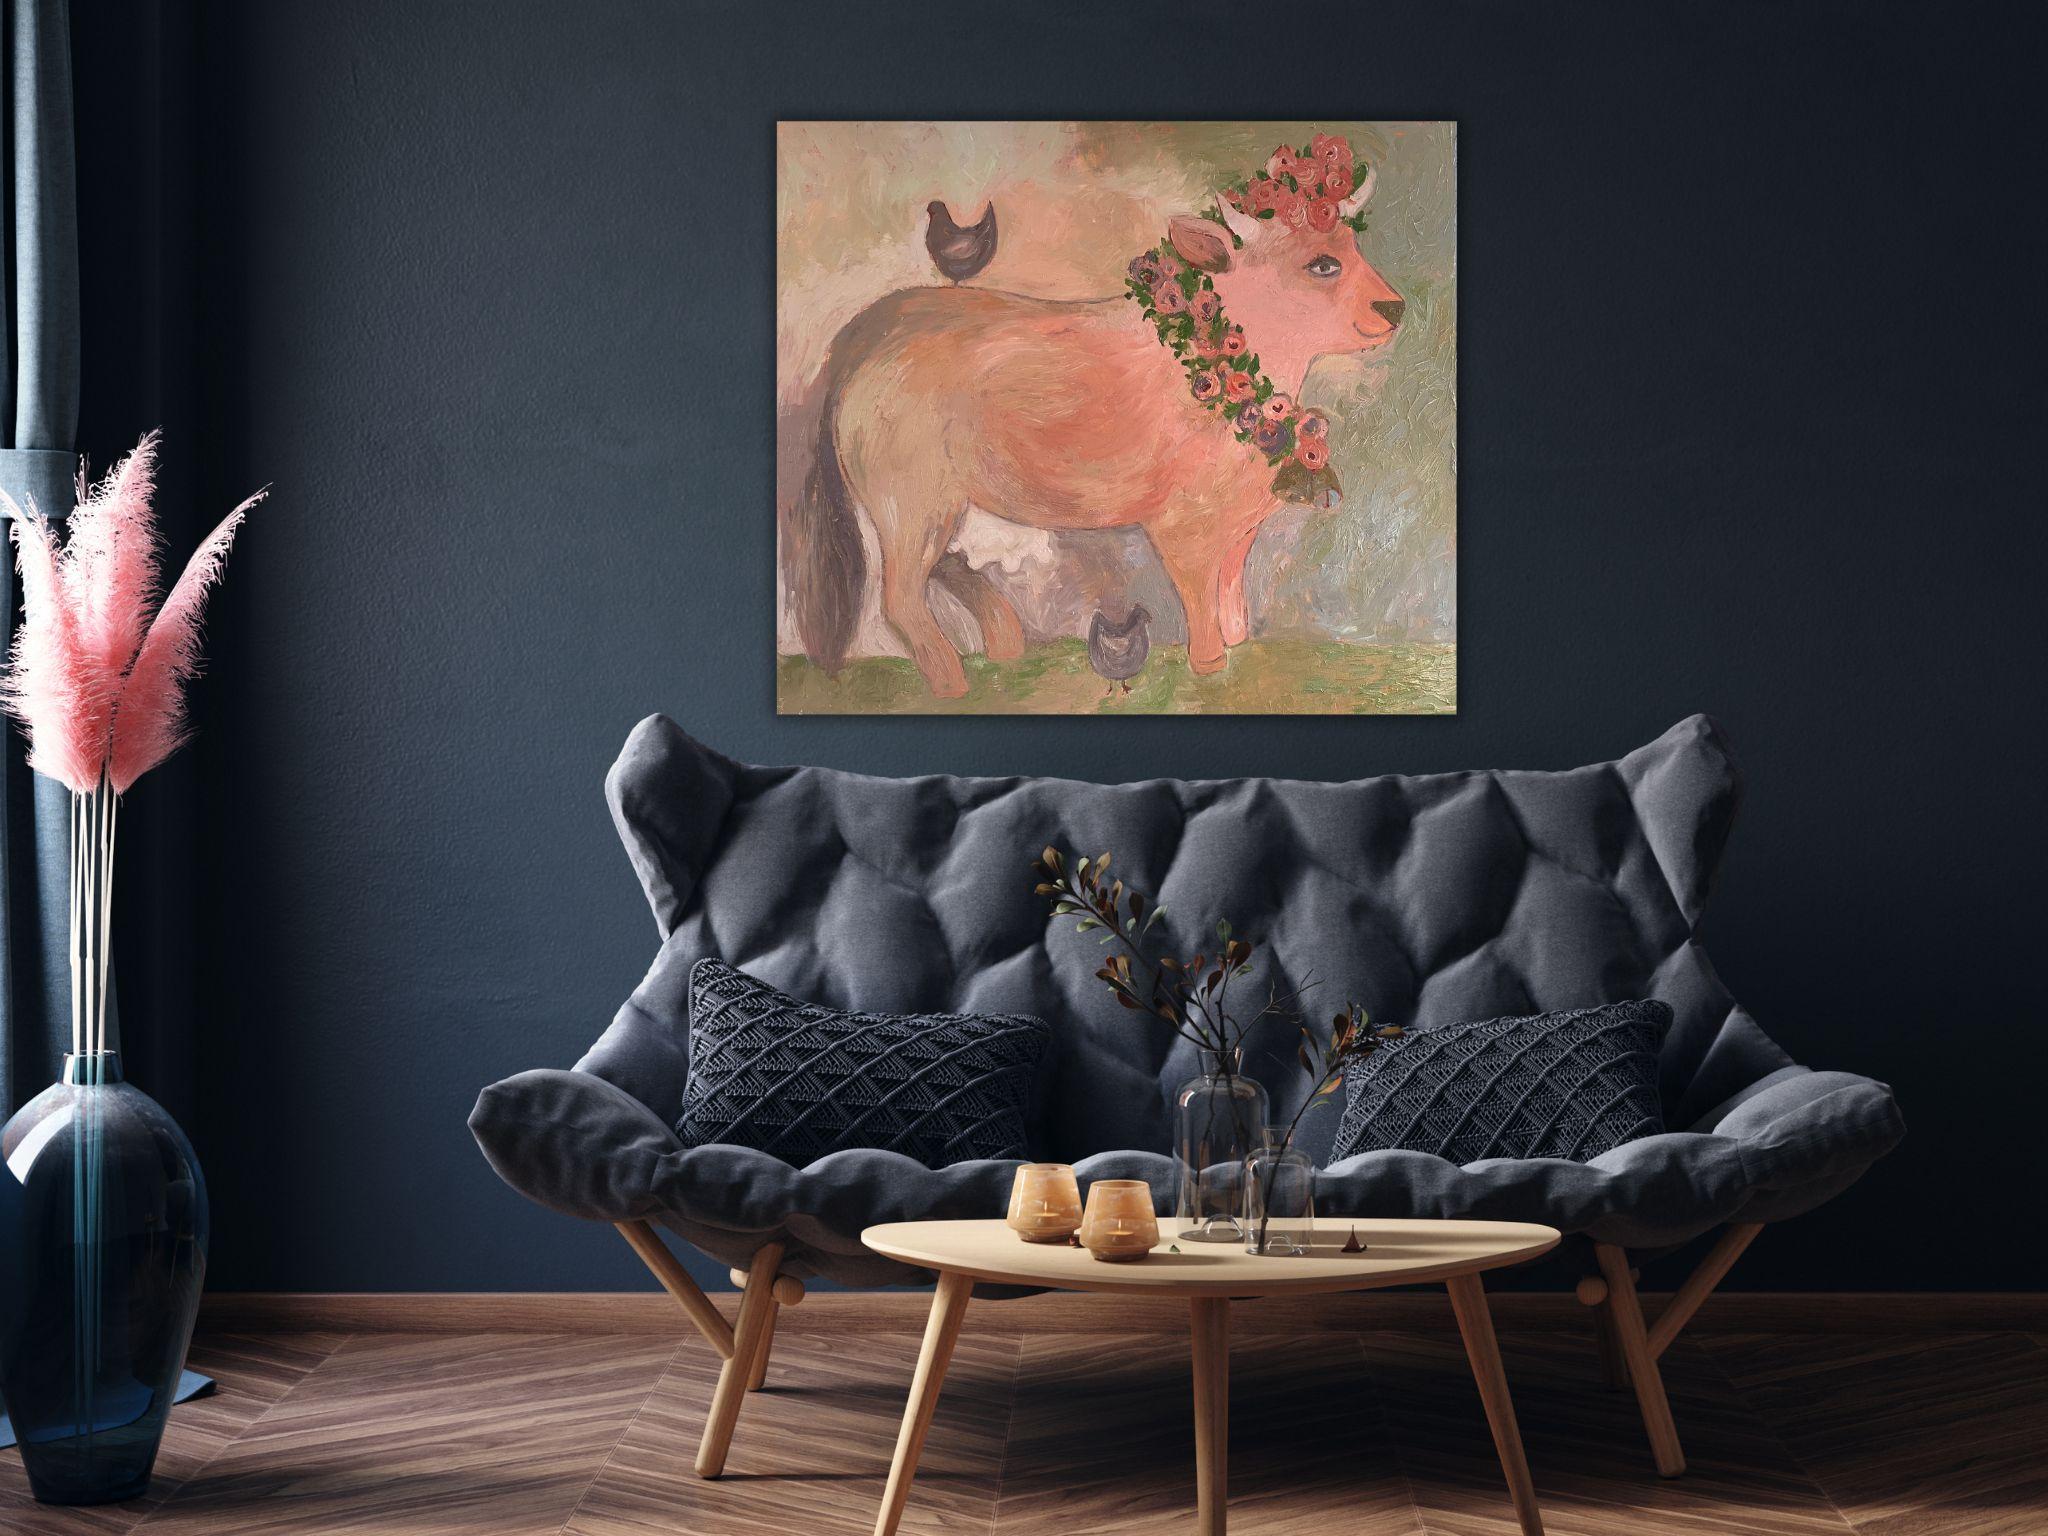 Ironic Cow - Painting by Dasha Pogodina